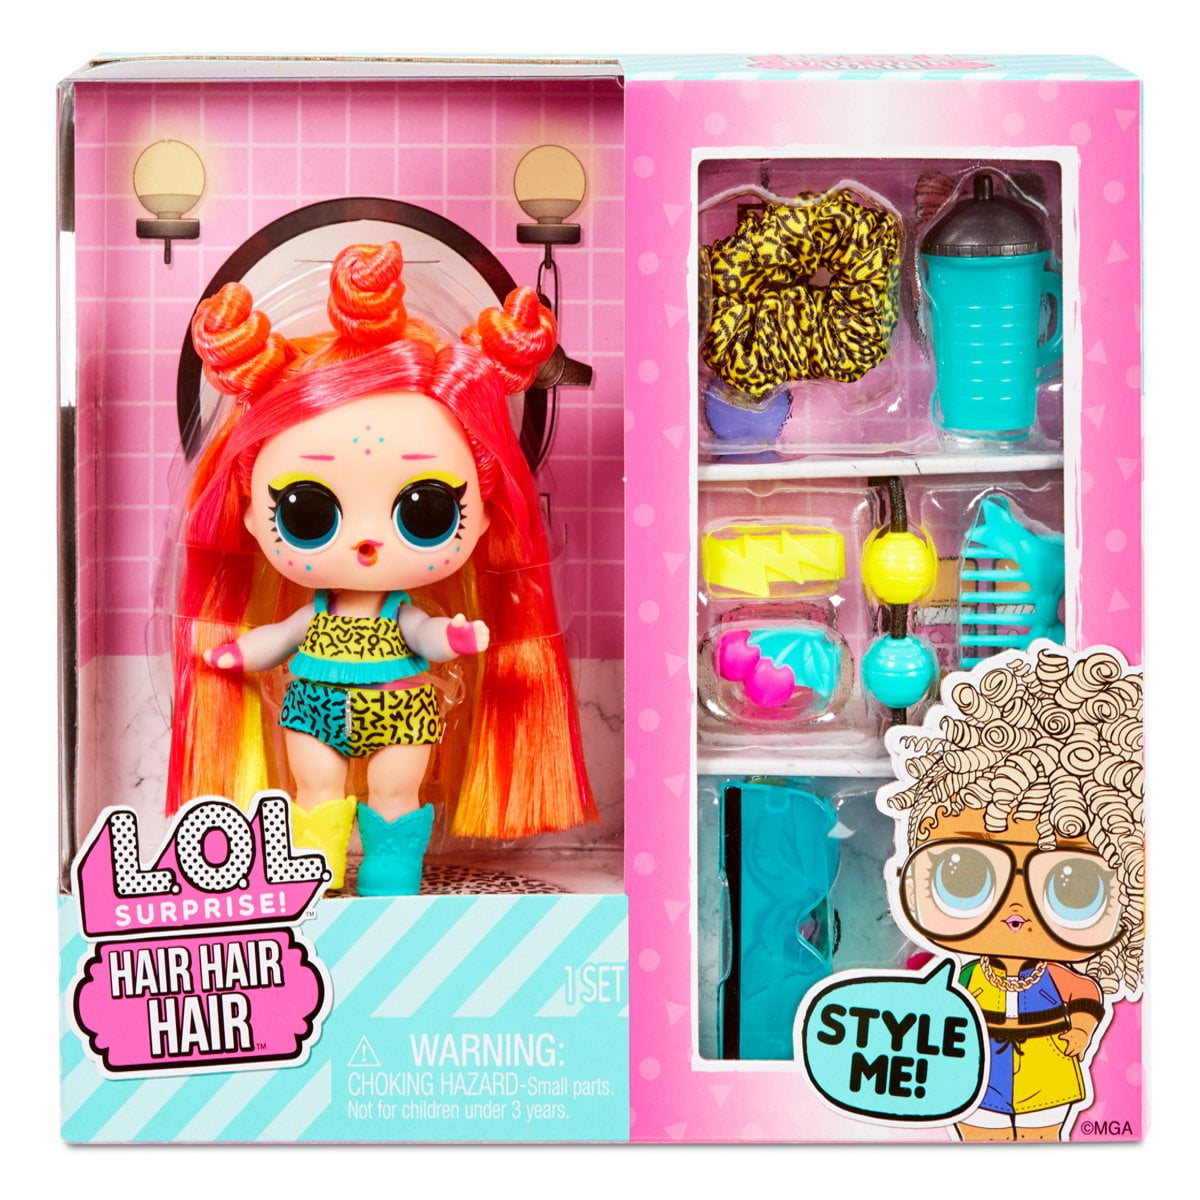 L.O.L. Surprise! Hair Hair Hair Doll with Pink Hair 10 Surprises